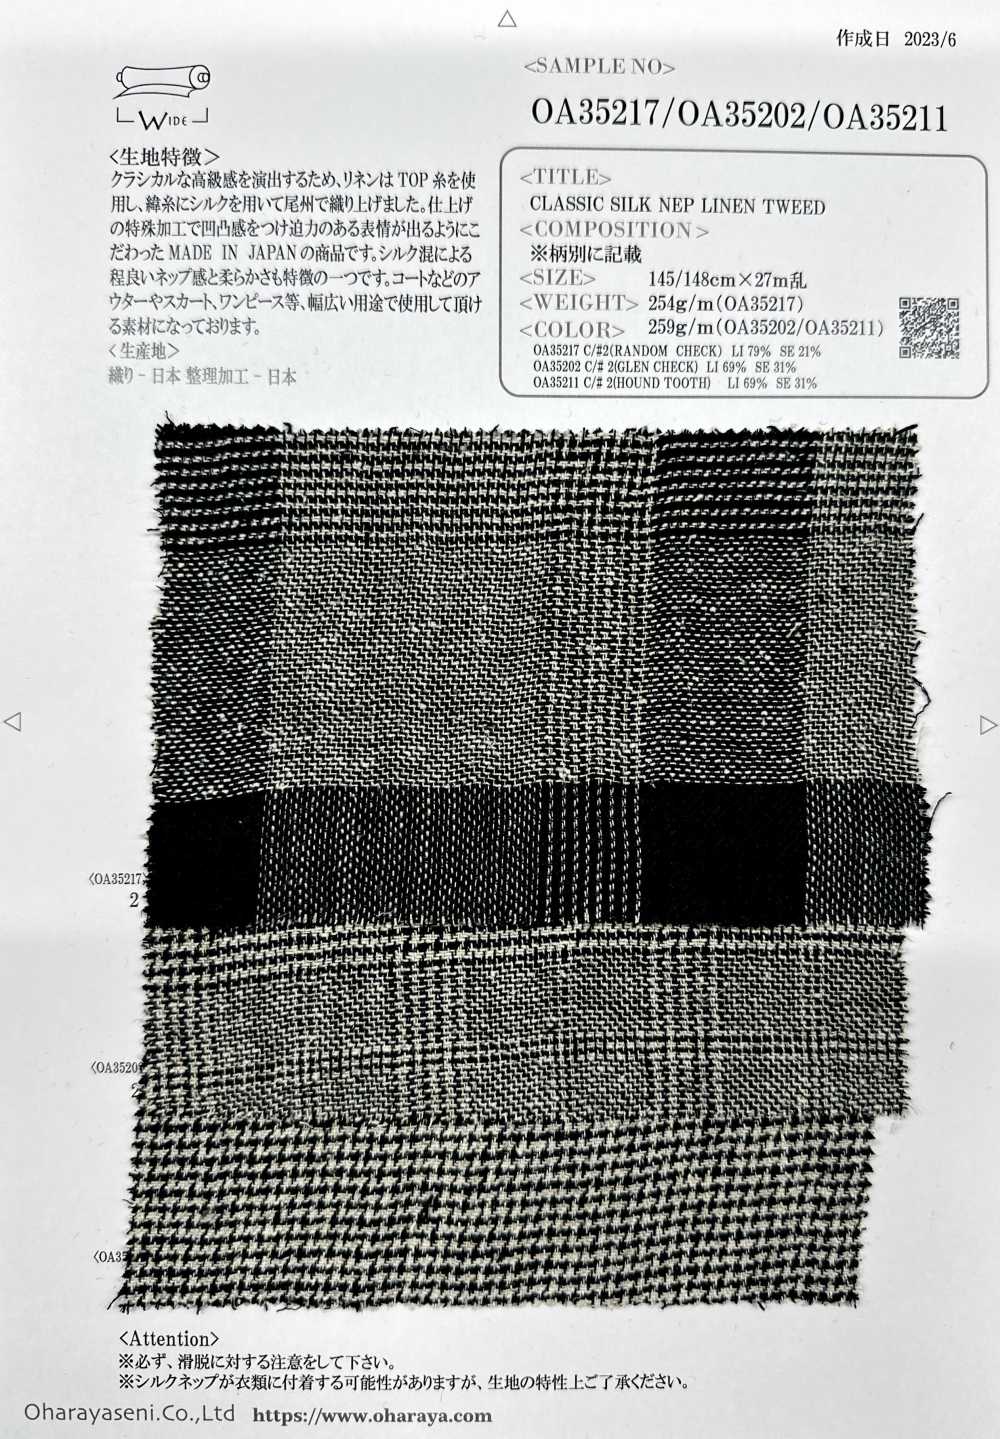 OA35217 LINO CLÁSICO TWEED LINO NEP[Fabrica Textil] Oharayaseni